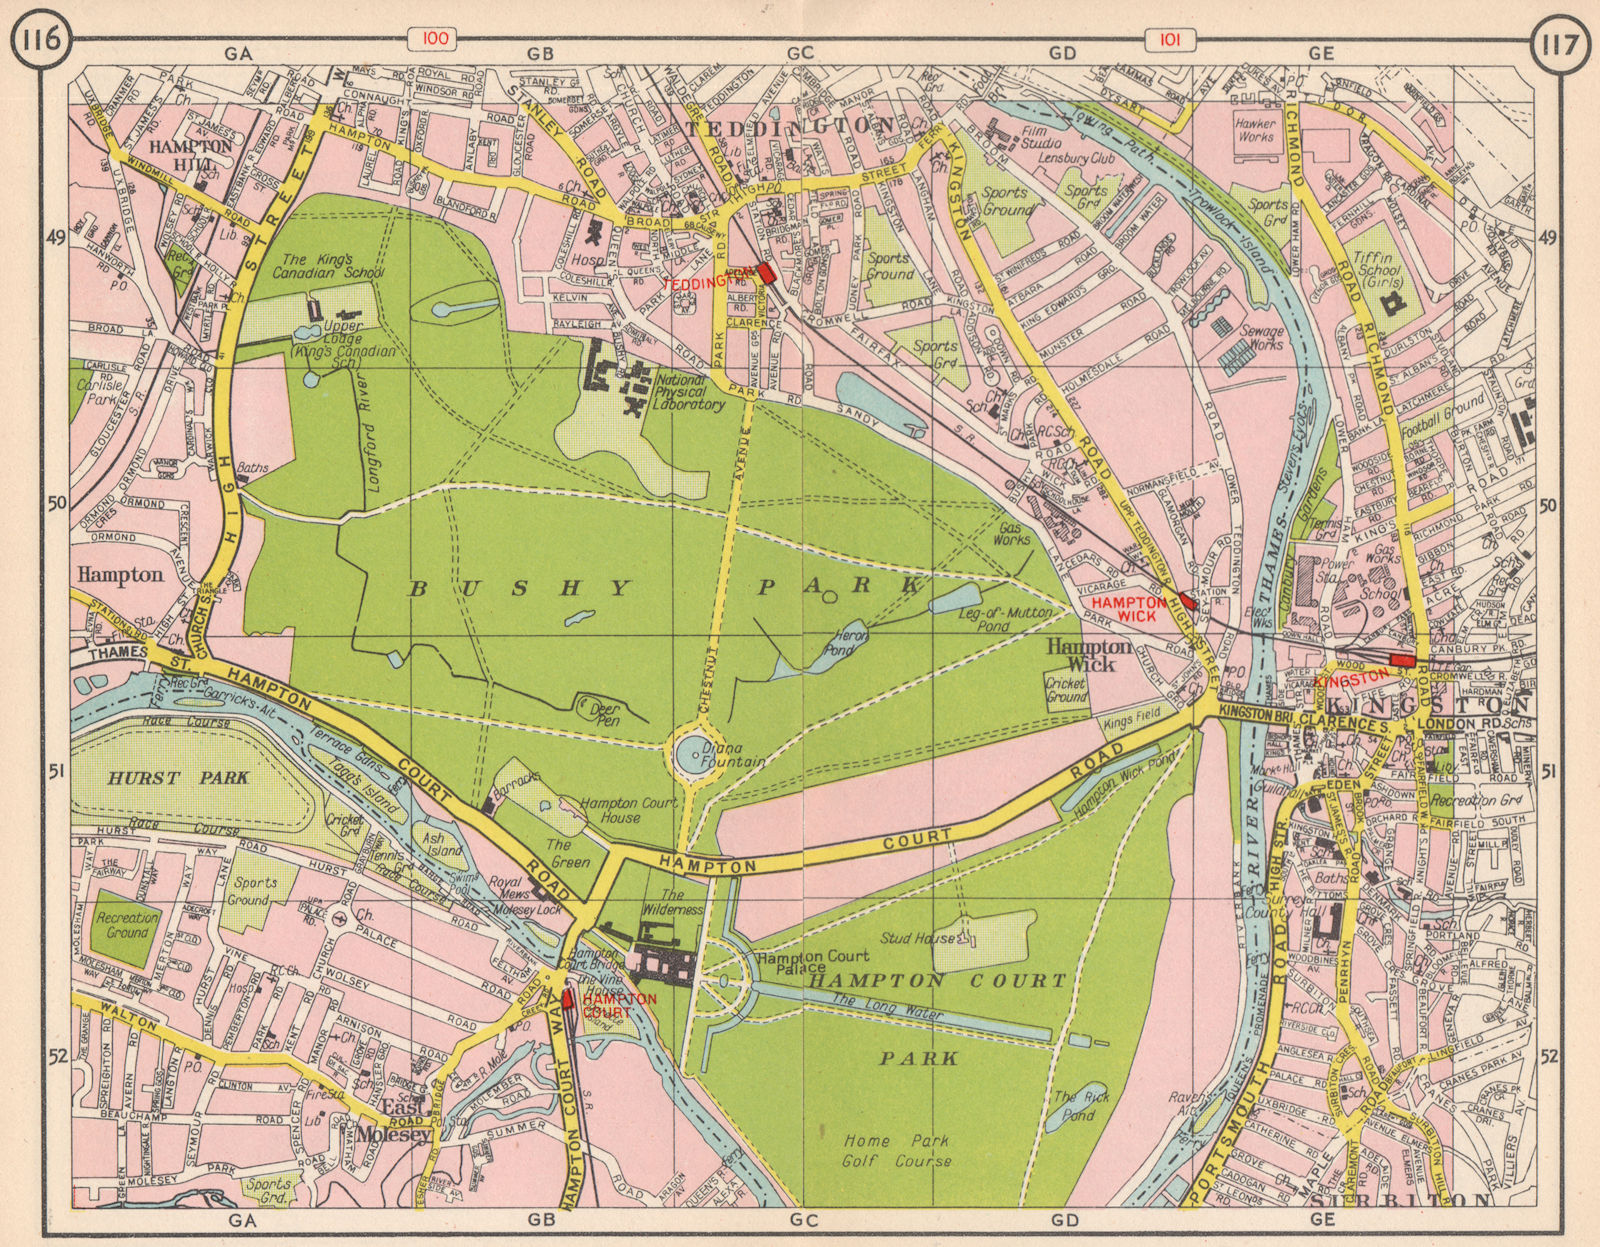 SW LONDON. Teddington Hampton Wick East Molesey Bushy Park Kingston 1953 map